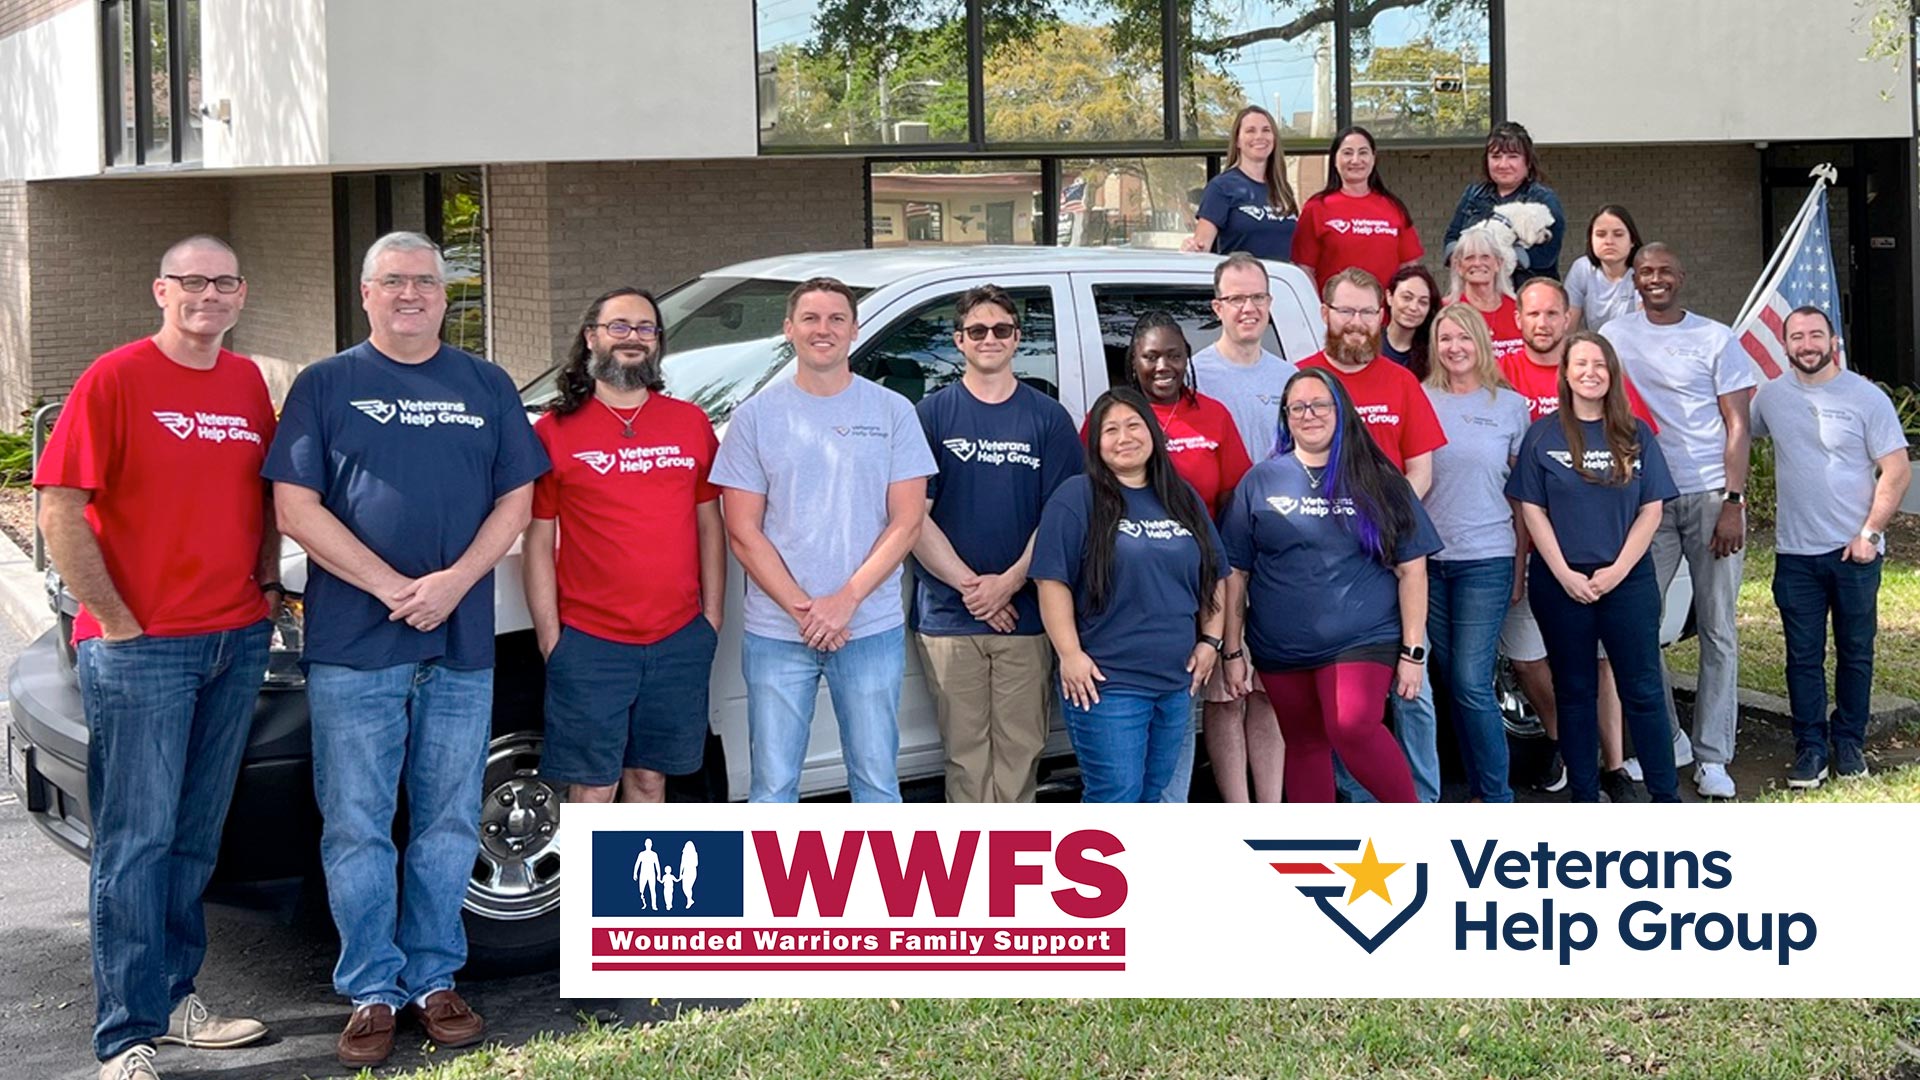 WWFS & Veterans Help Group